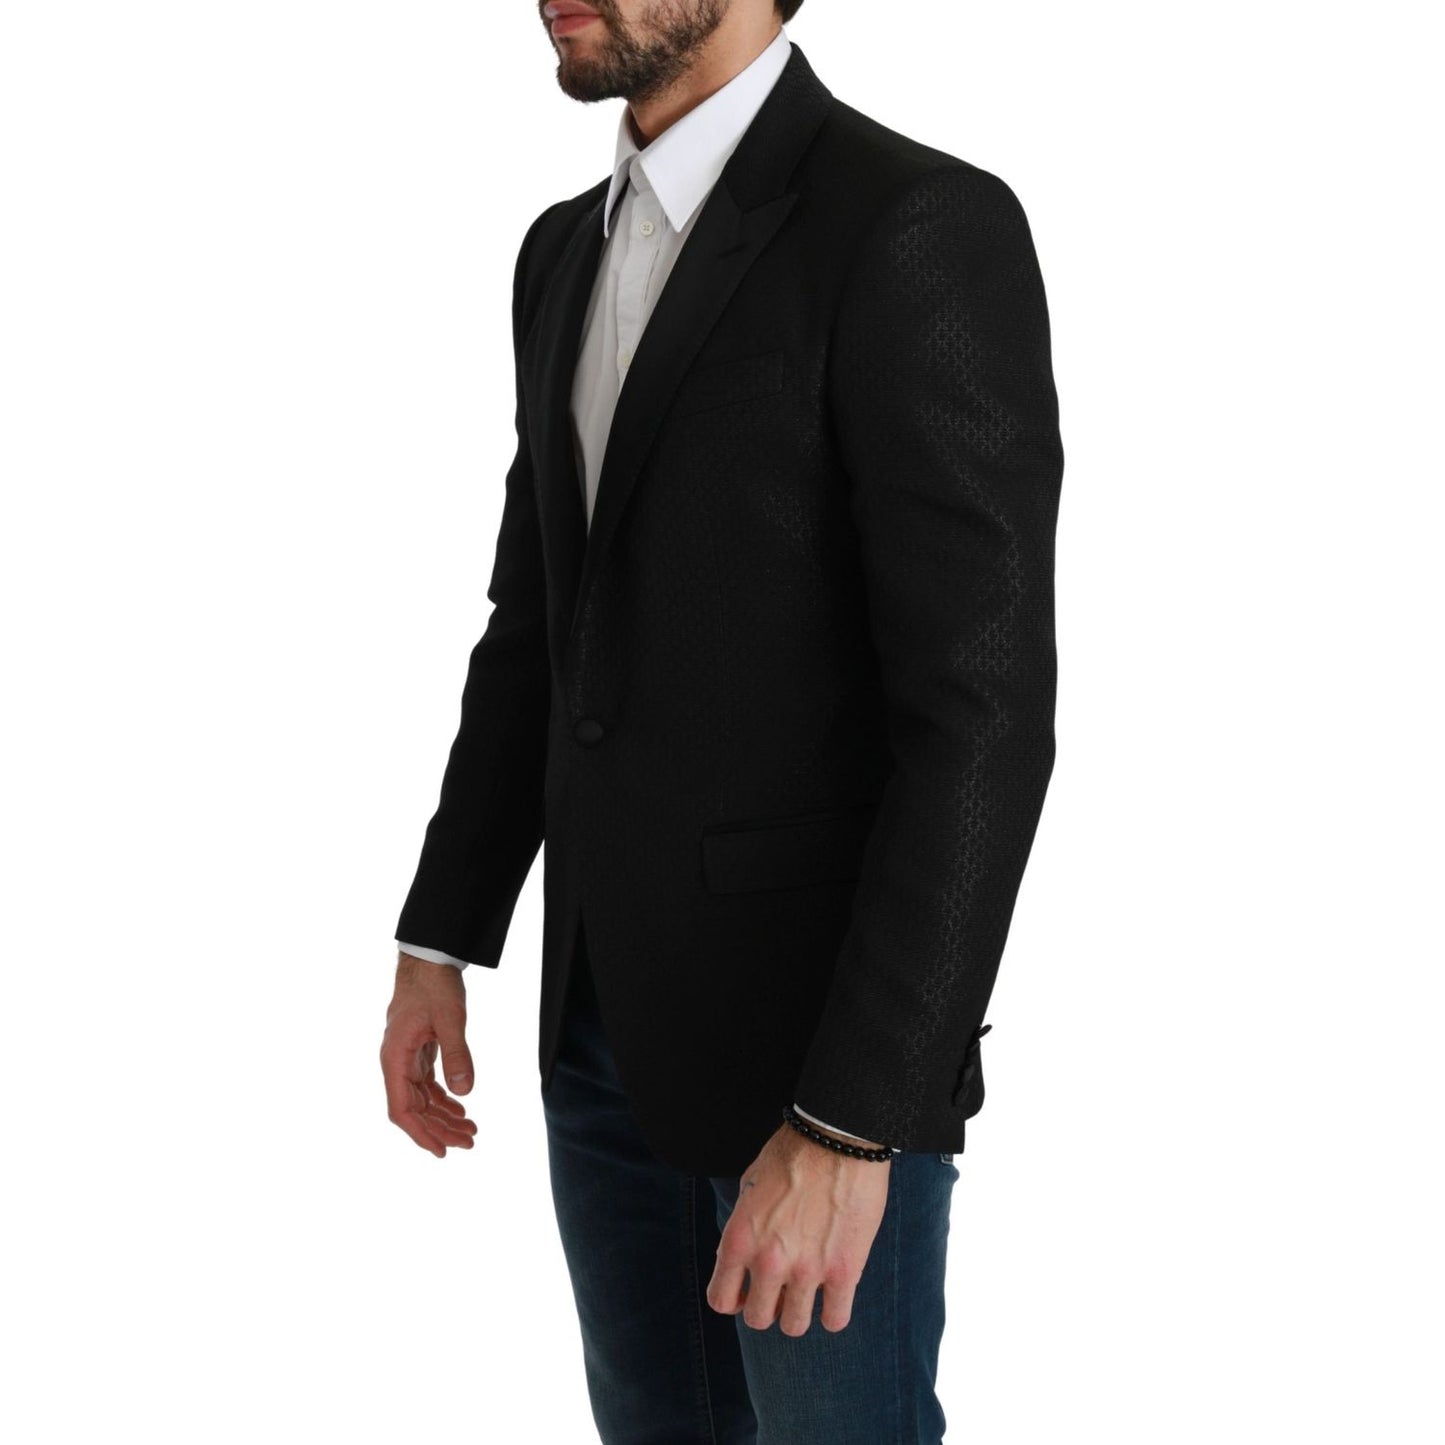 Dolce & Gabbana Slim Fit Martini Black Blazer Jacket Suit black-slim-fit-jacket-martini-blazer IMG_1014-scaled-fec8fc2e-4a2.jpg